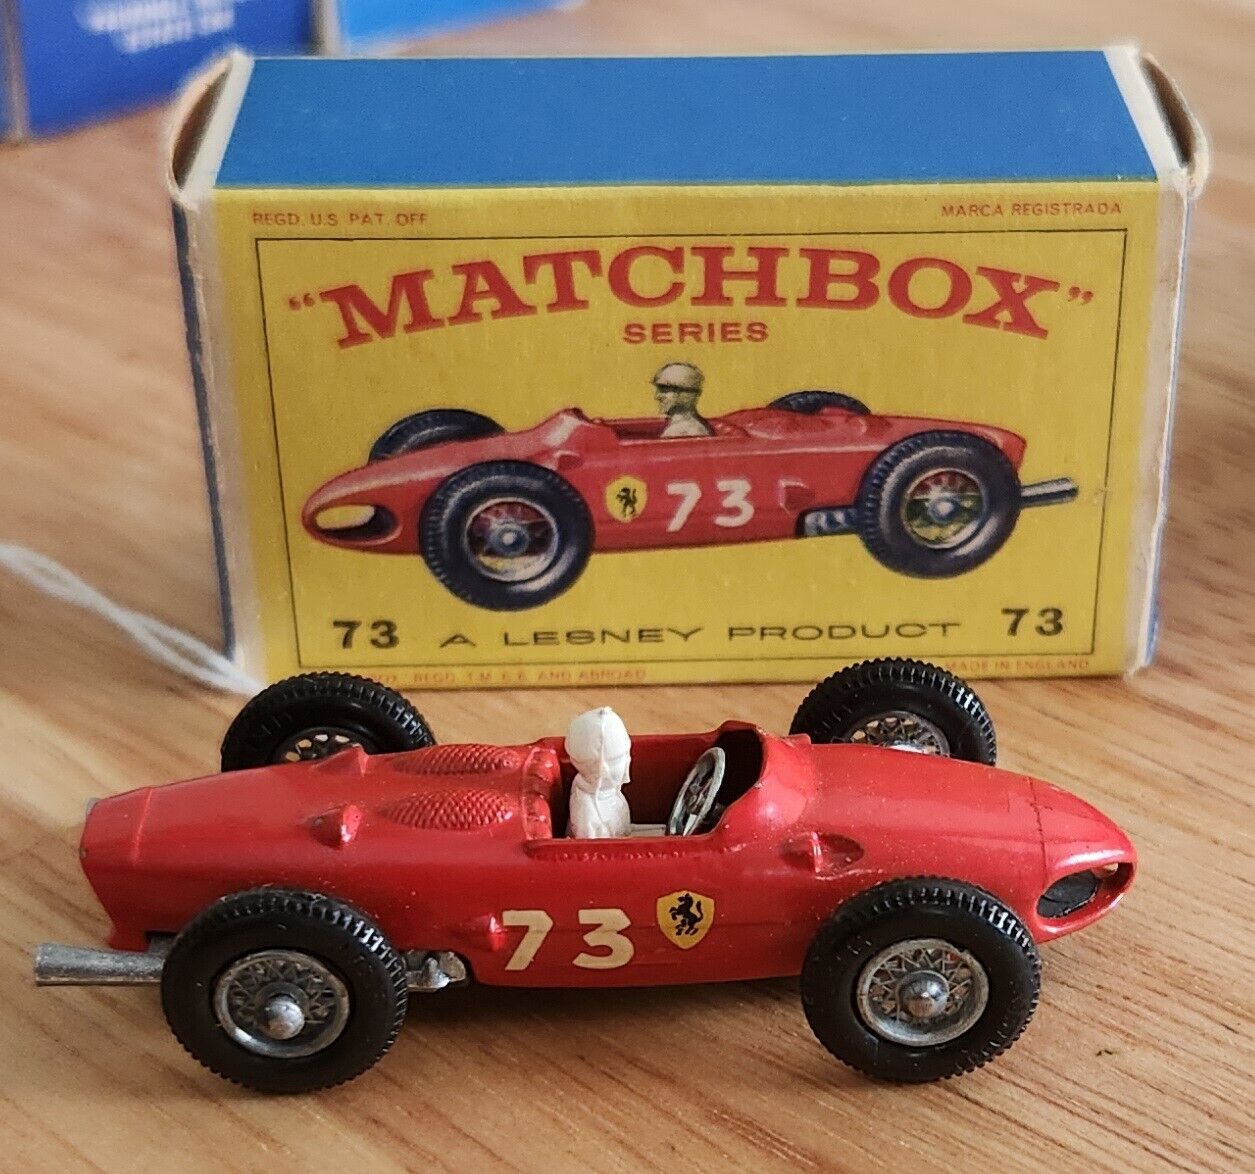 Vintage matchbox #73 Ferrari racing car with original box.